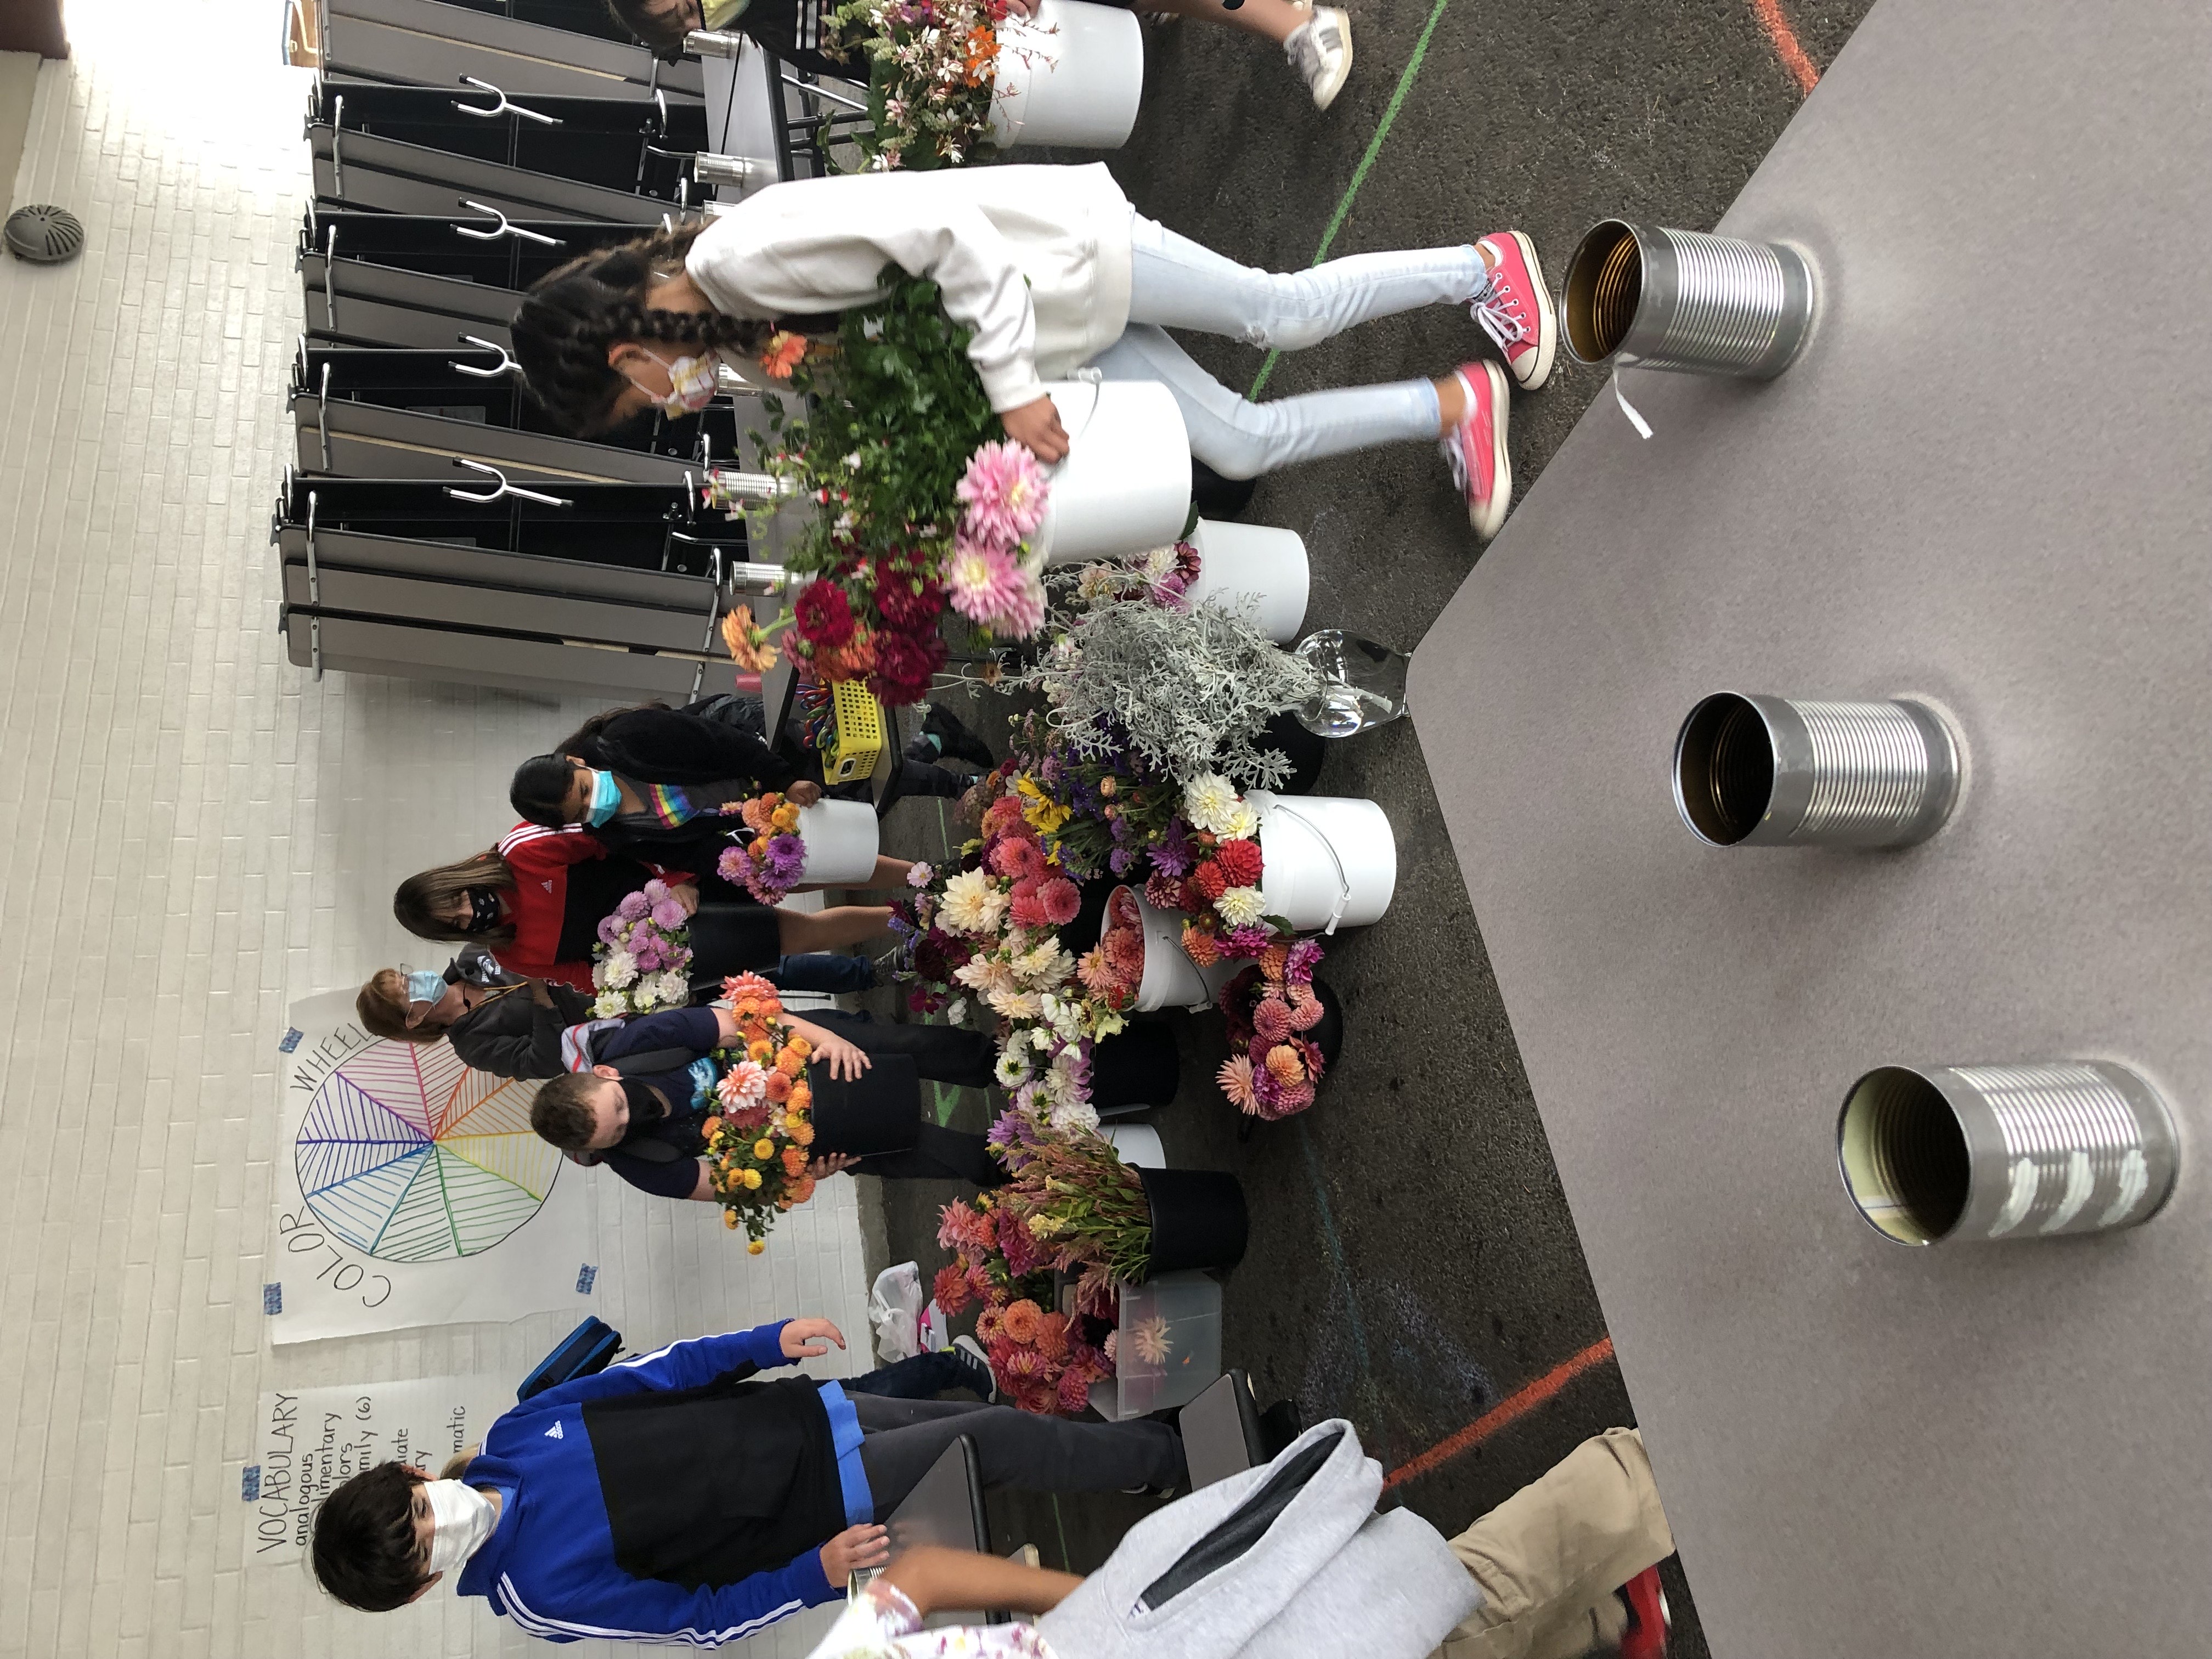 Students organizing supplies to work on flower arrangements.